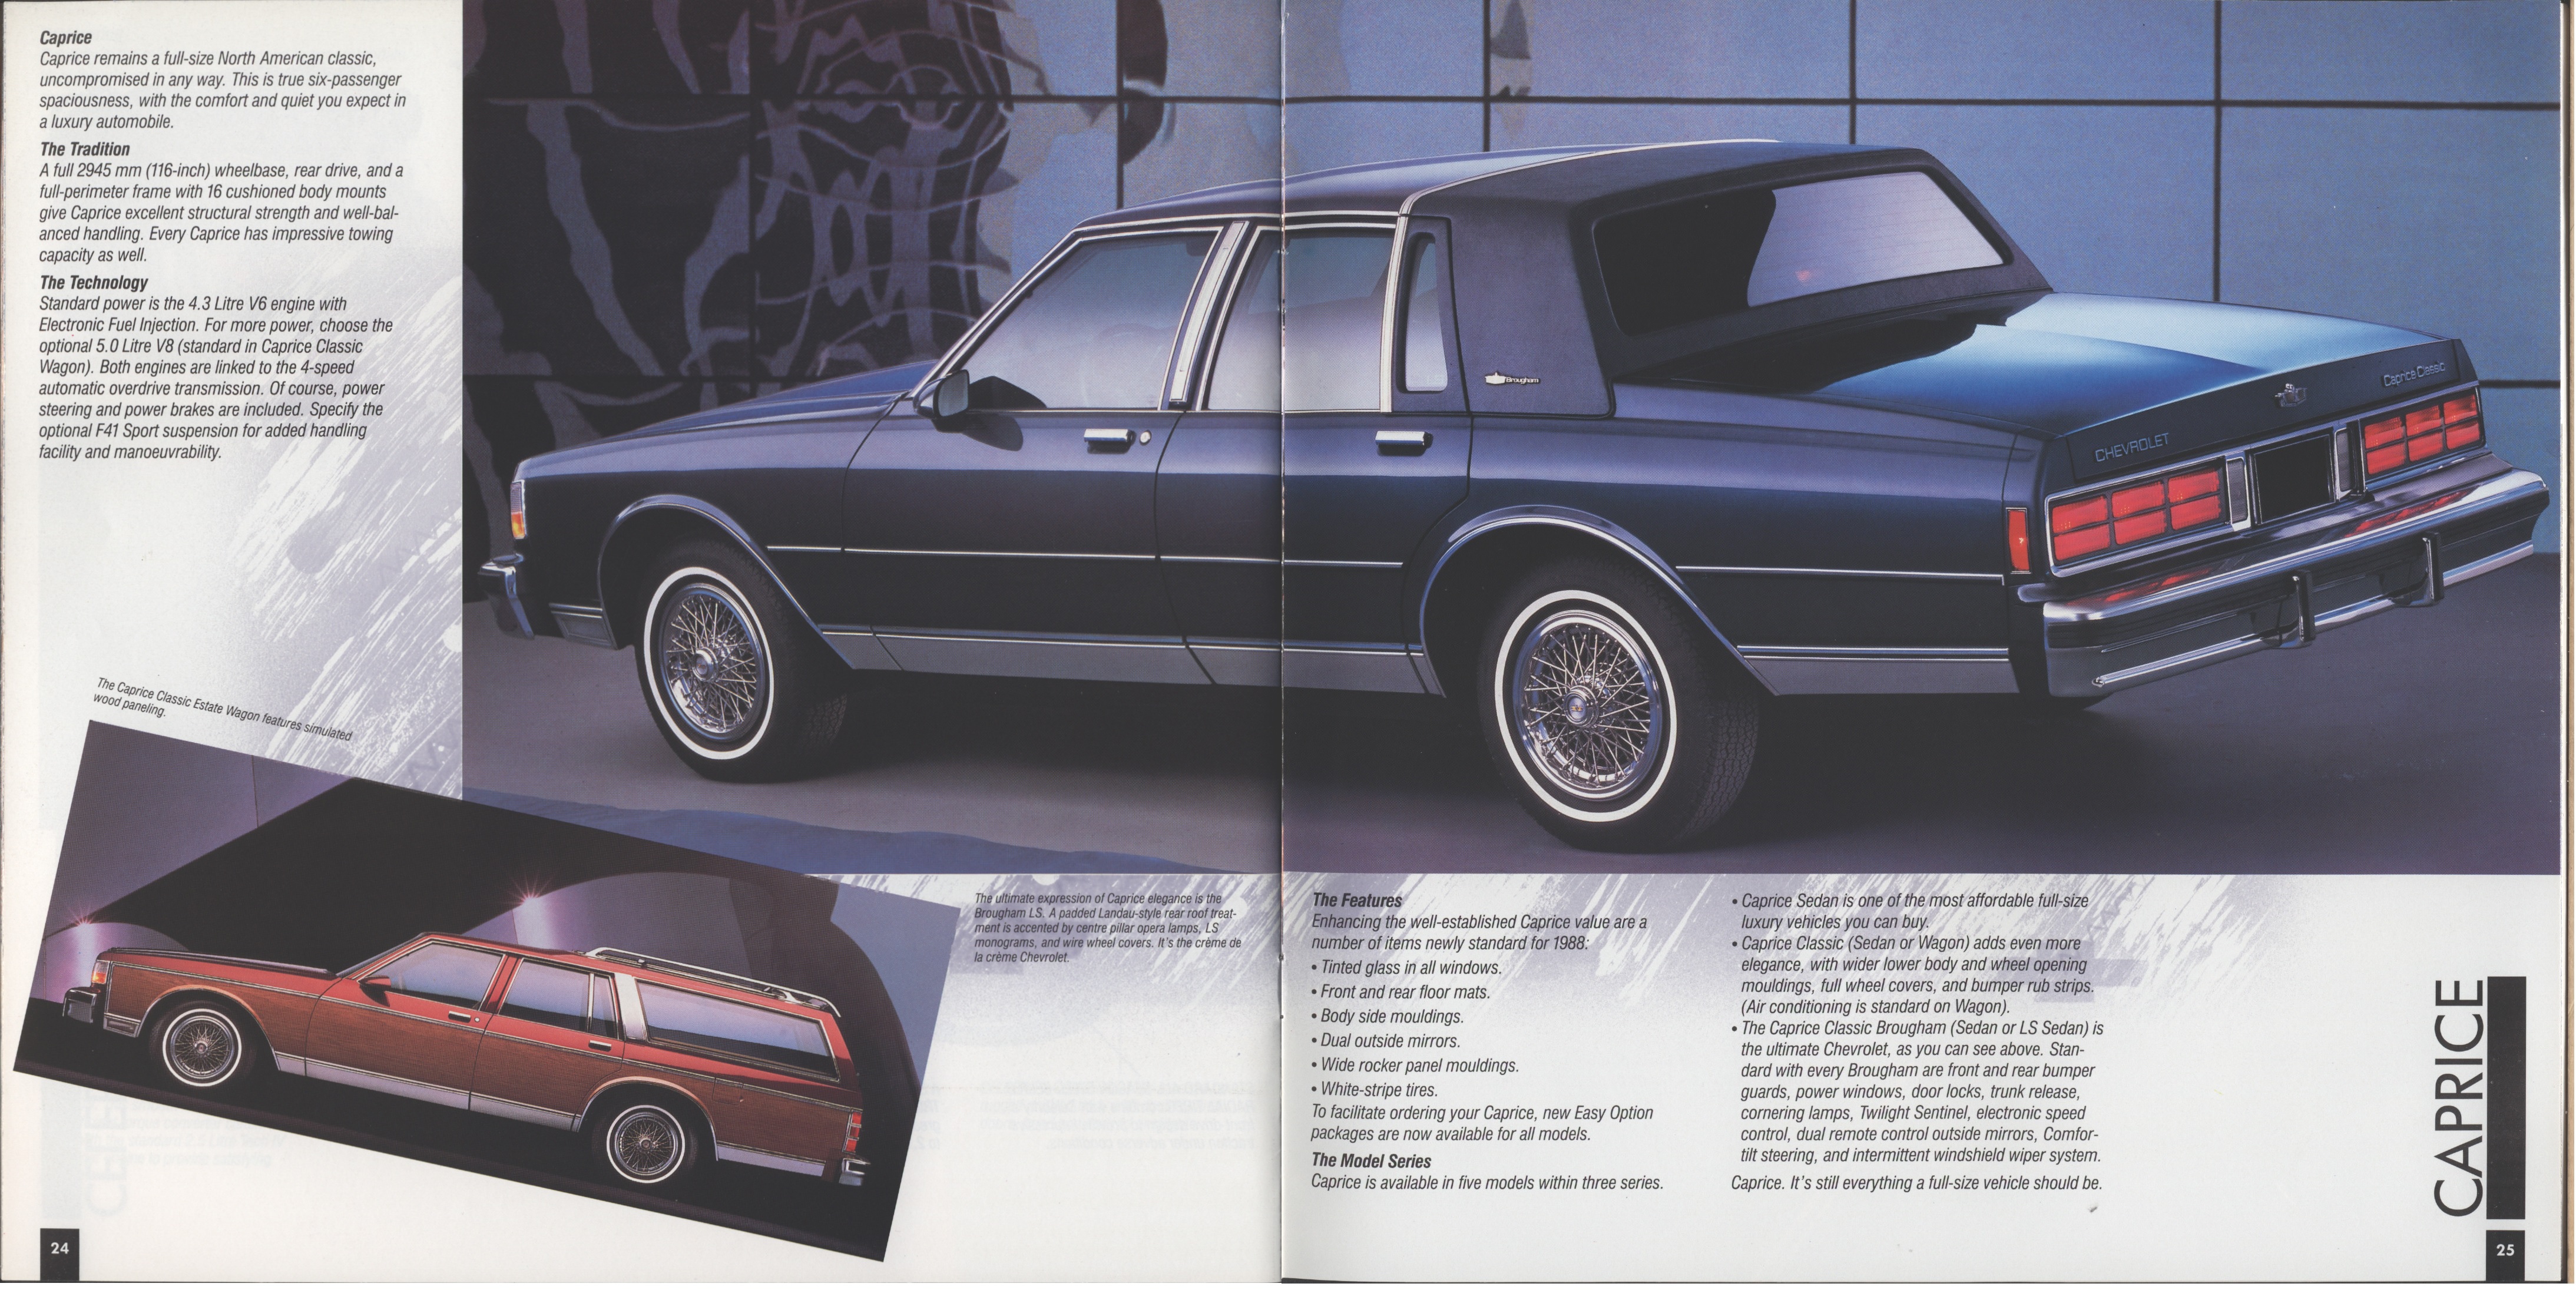 1988 Chevrolet Family Cars Brochure (Cdn) 24-25